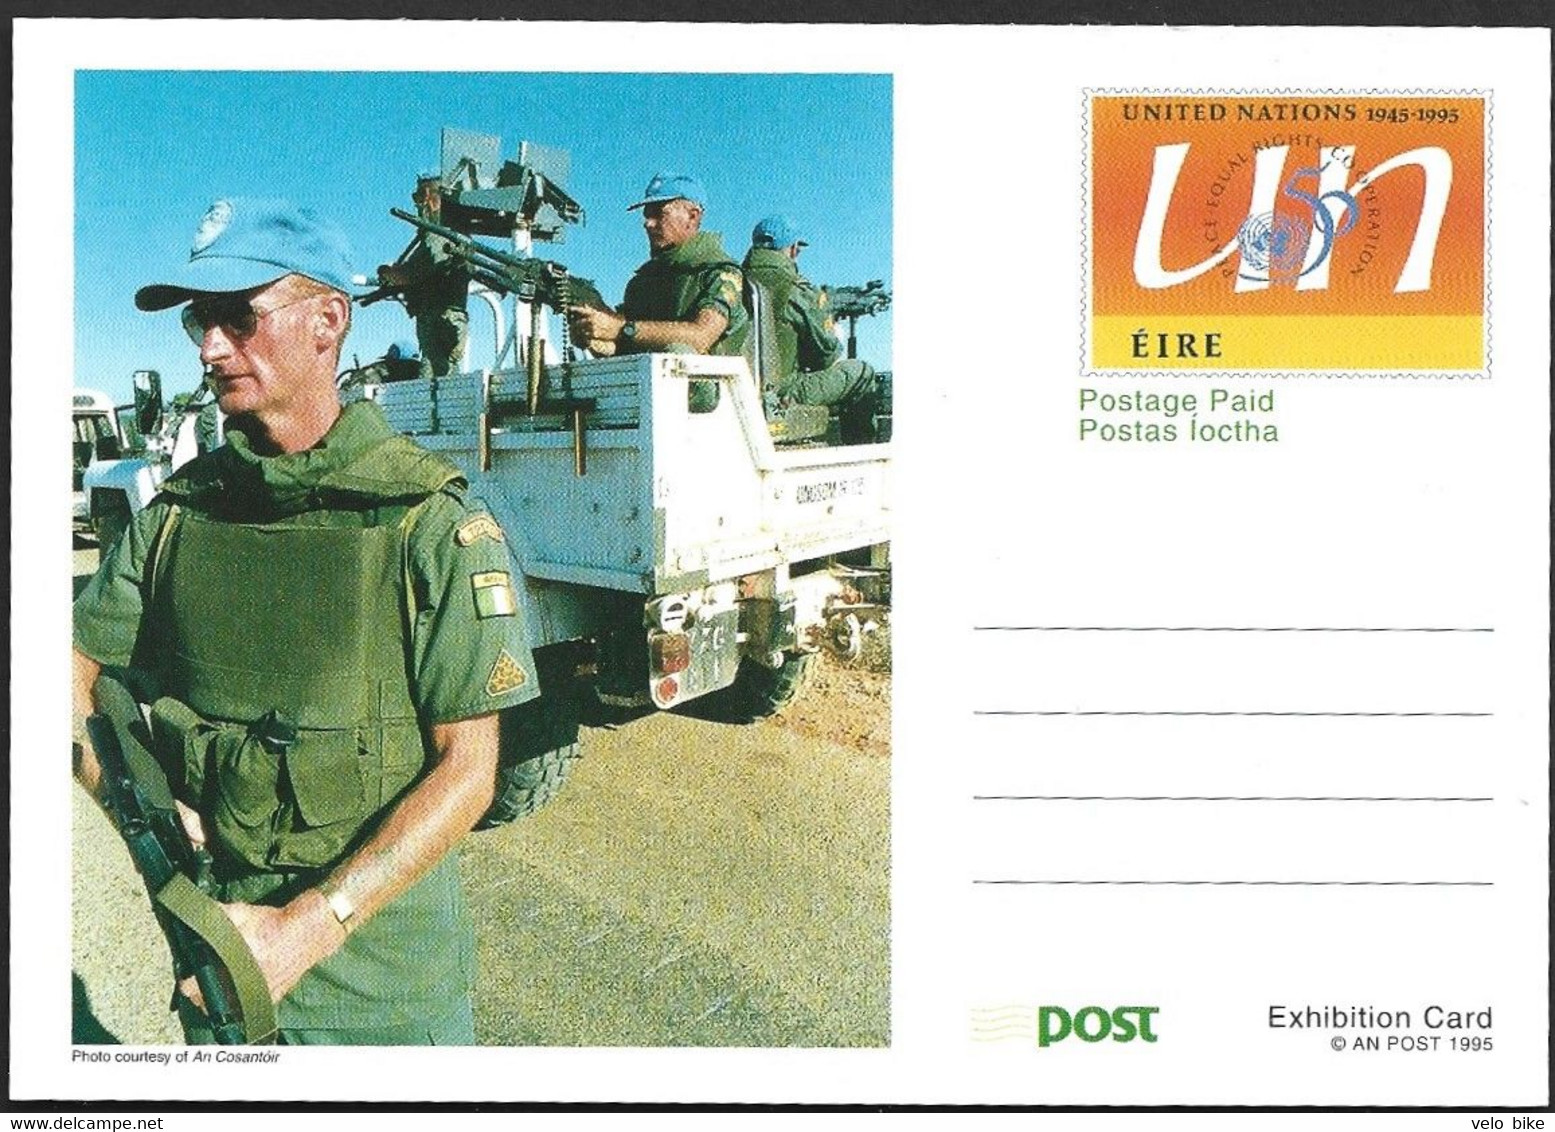 Eire Ireland Postal Stationery Postage Paid Exhibition Card 1995 UN Soldier Uniform Weapon Truck Loggo Globe Peace Equal - Entiers Postaux